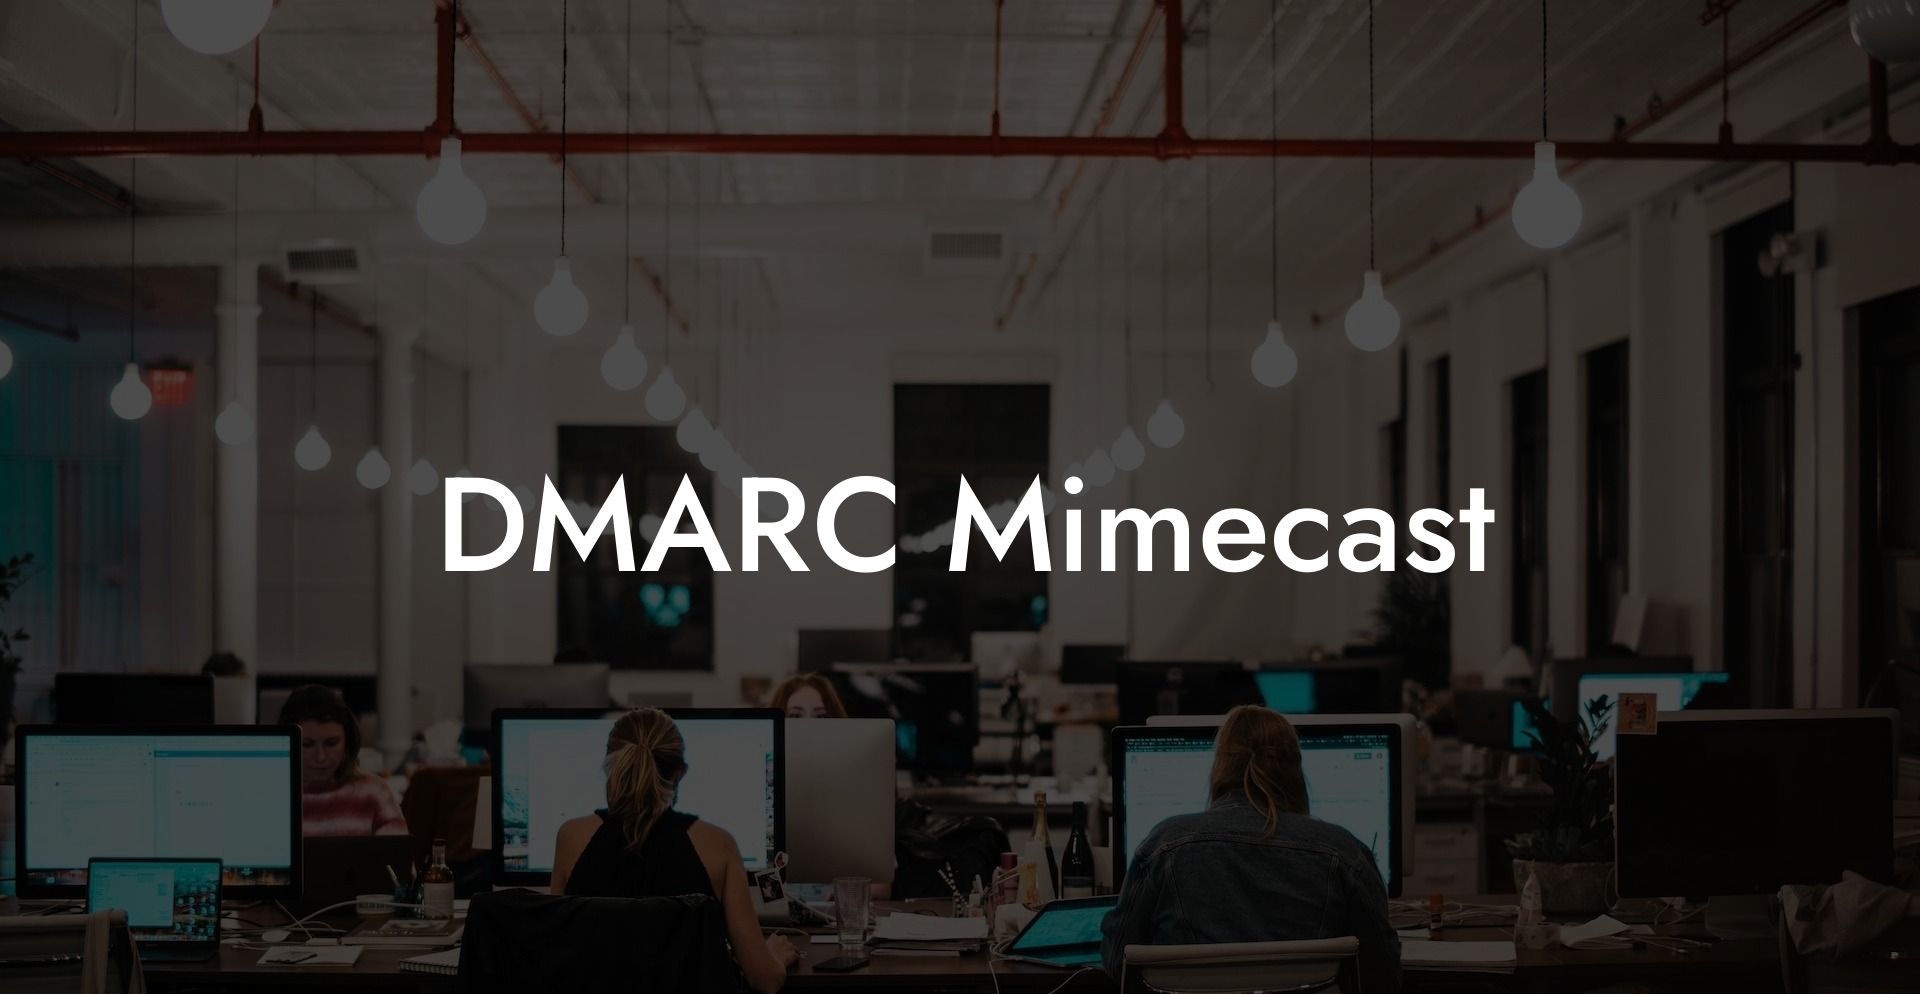 DMARC Mimecast